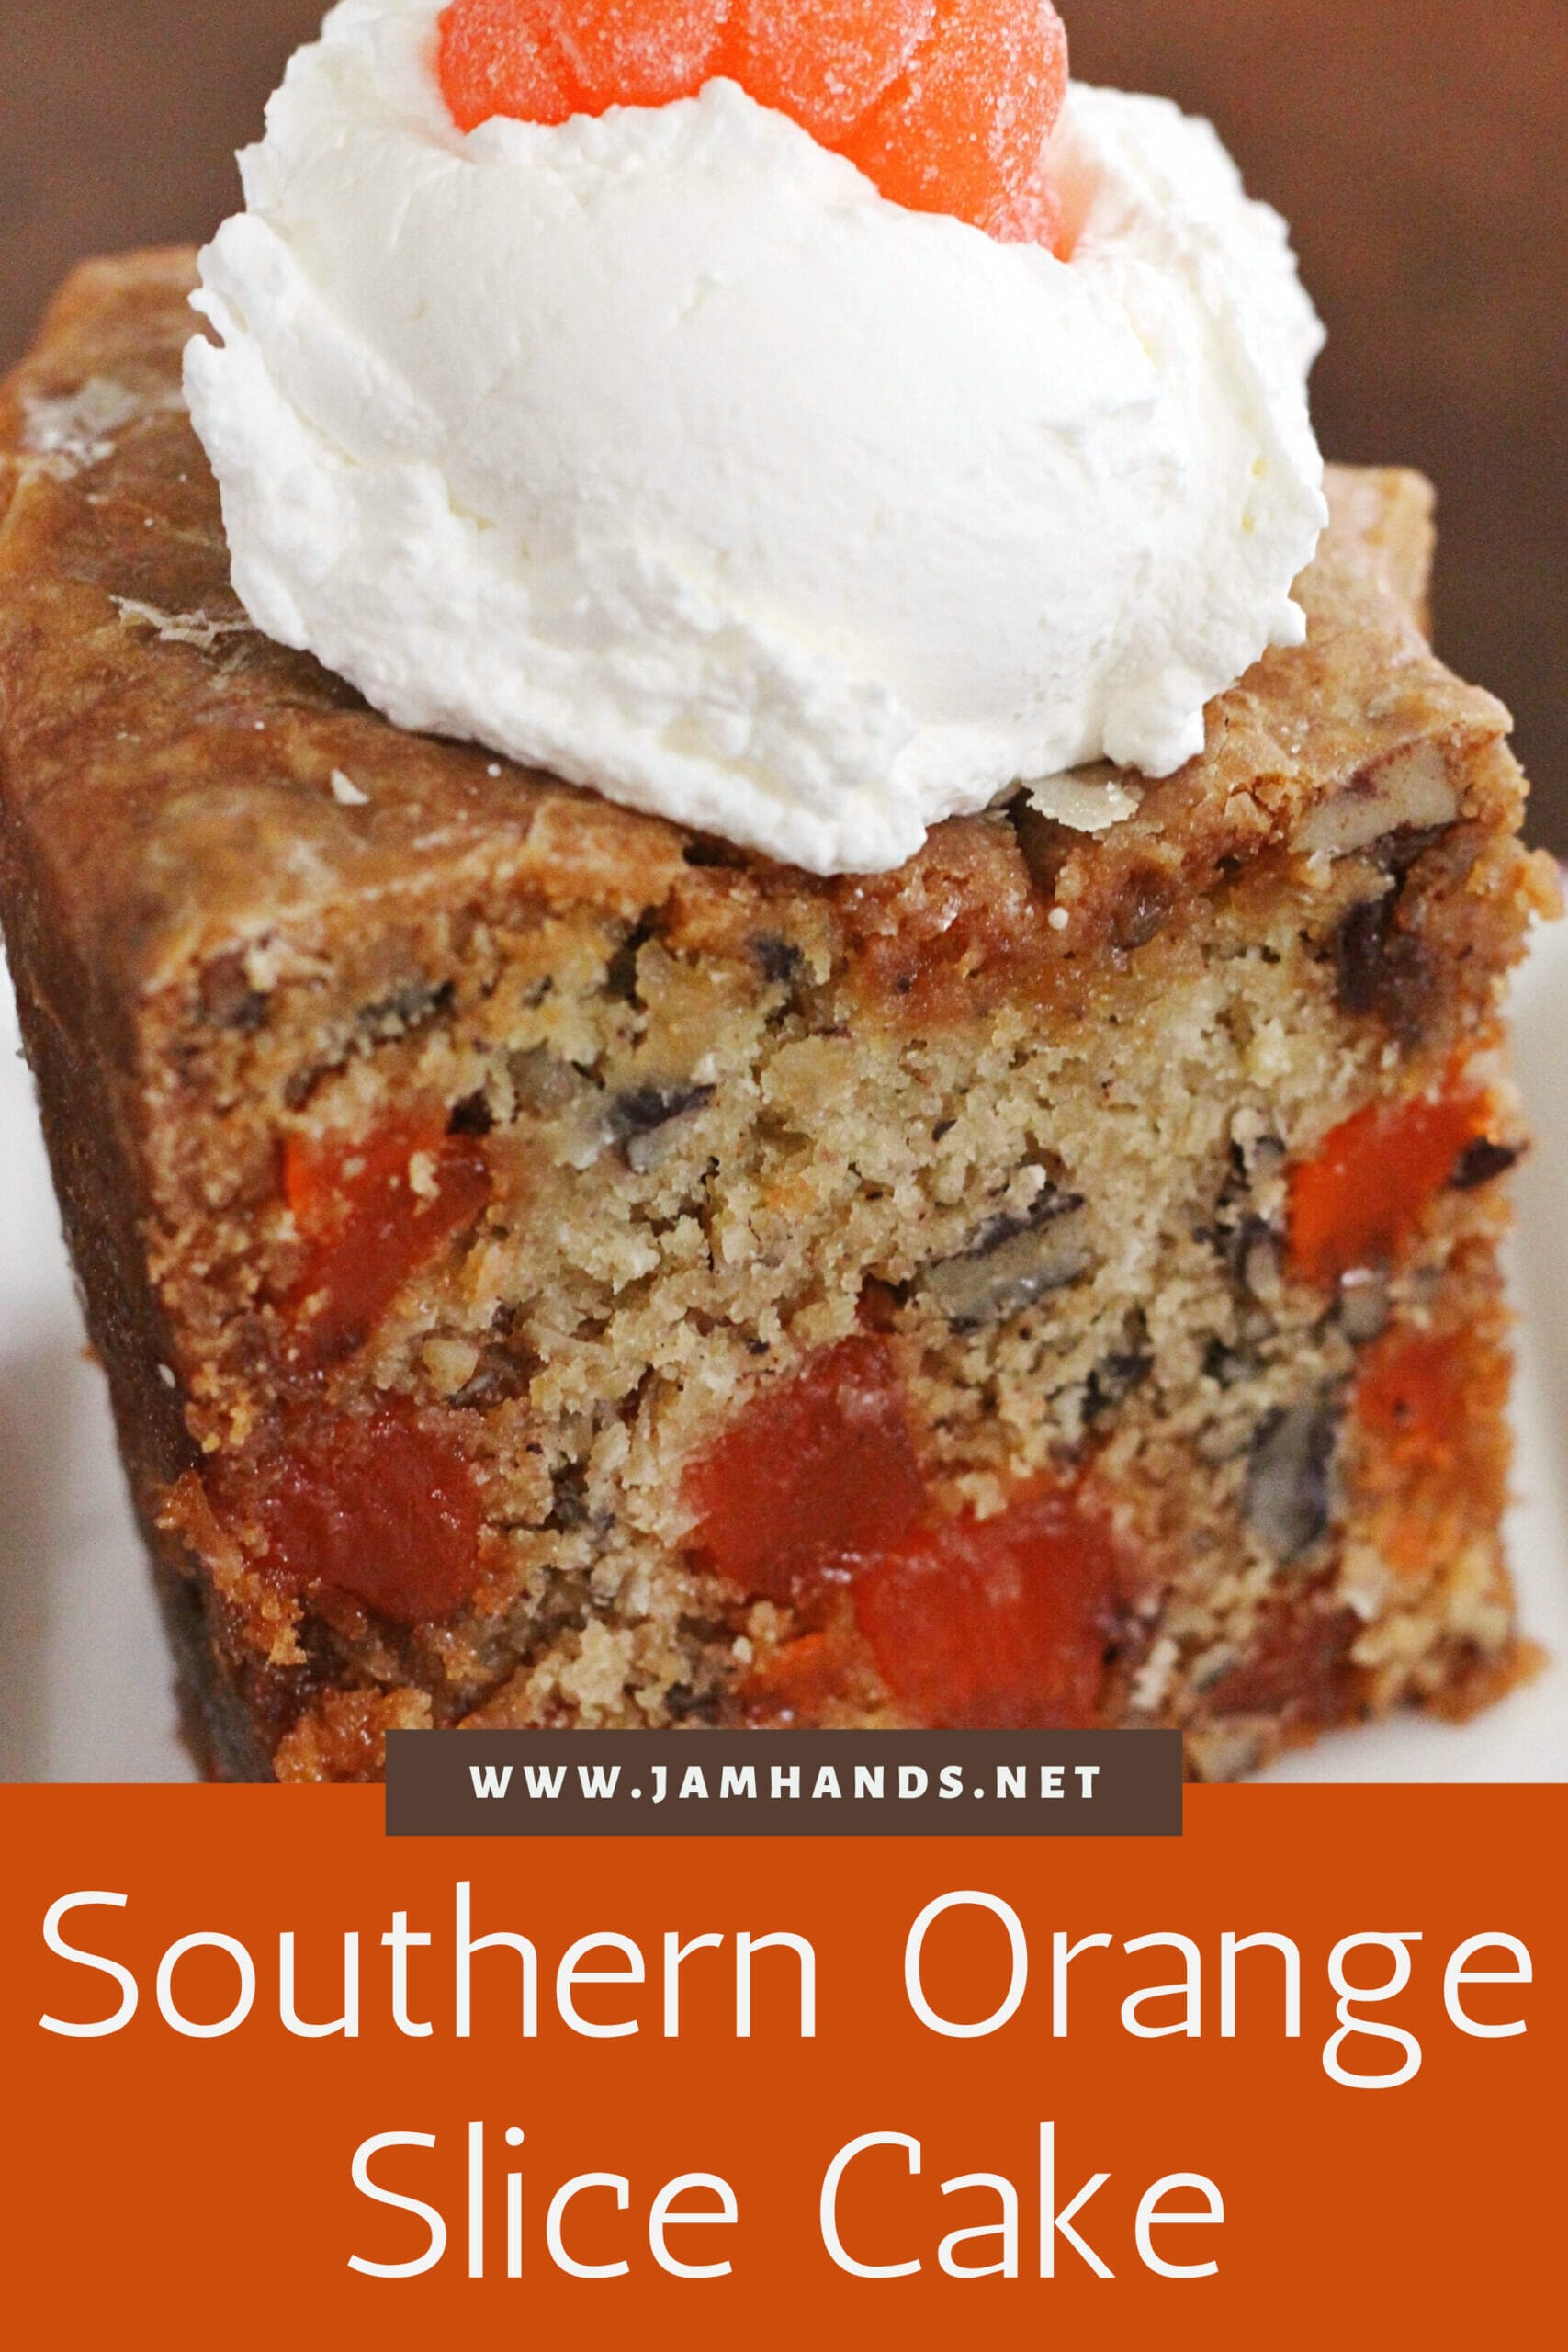 Classic Southern Orange Slice Cake